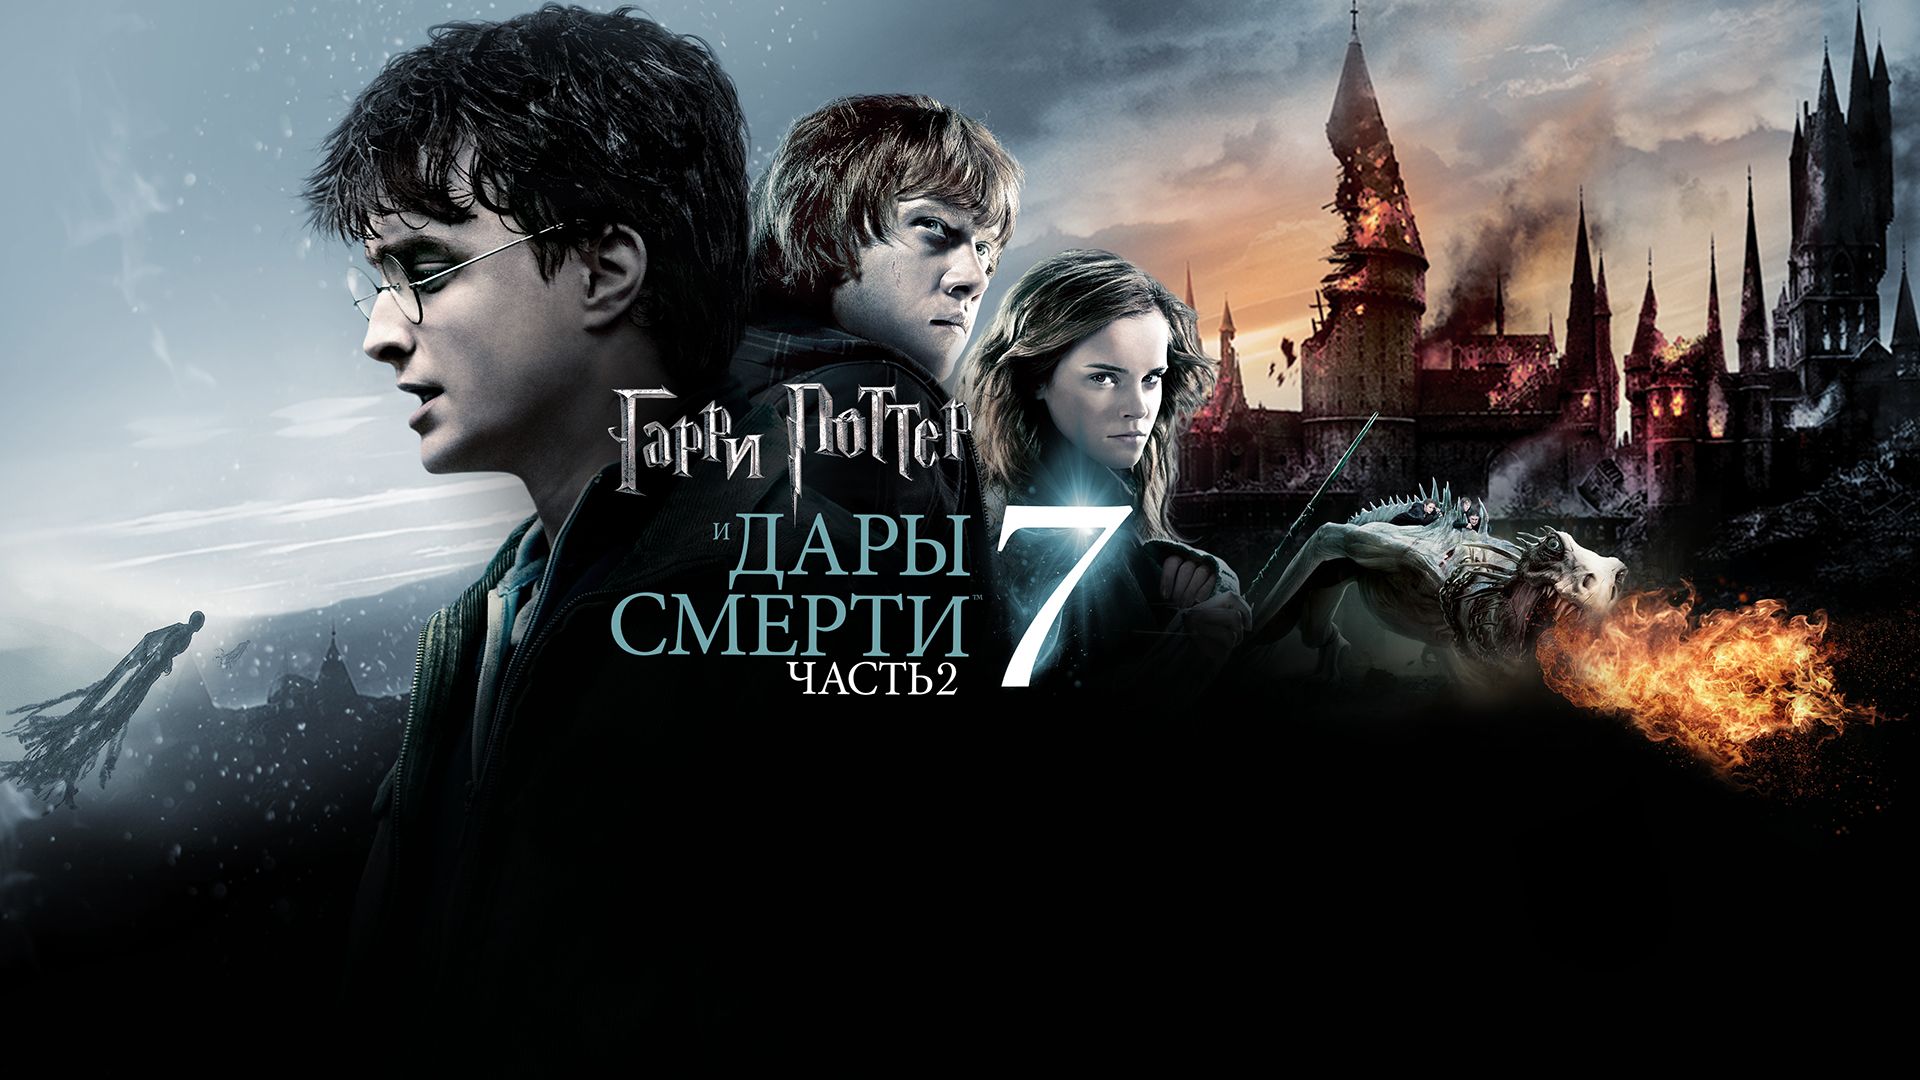 Гарри Поттер и Дары смерти: Часть 2 | Harry Potter and the Deathly Hallows - Part 2 (2011)